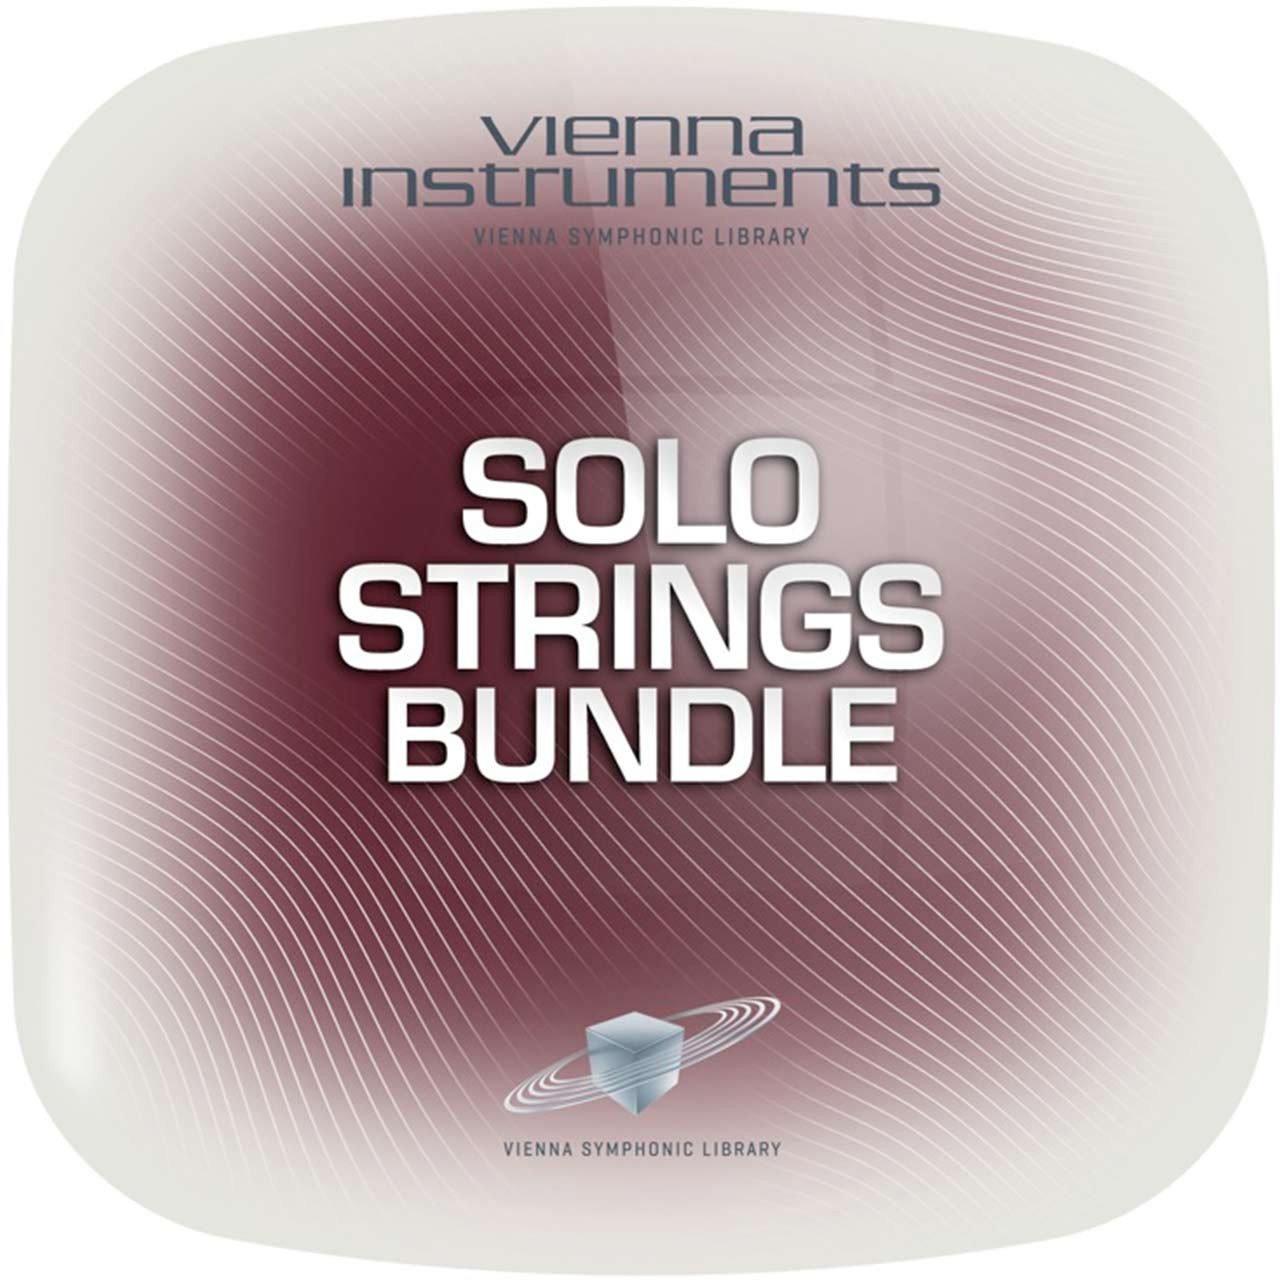 Software Bundles - Vienna Symphonic Library VSL - SOLO STRINGS BUNDLE